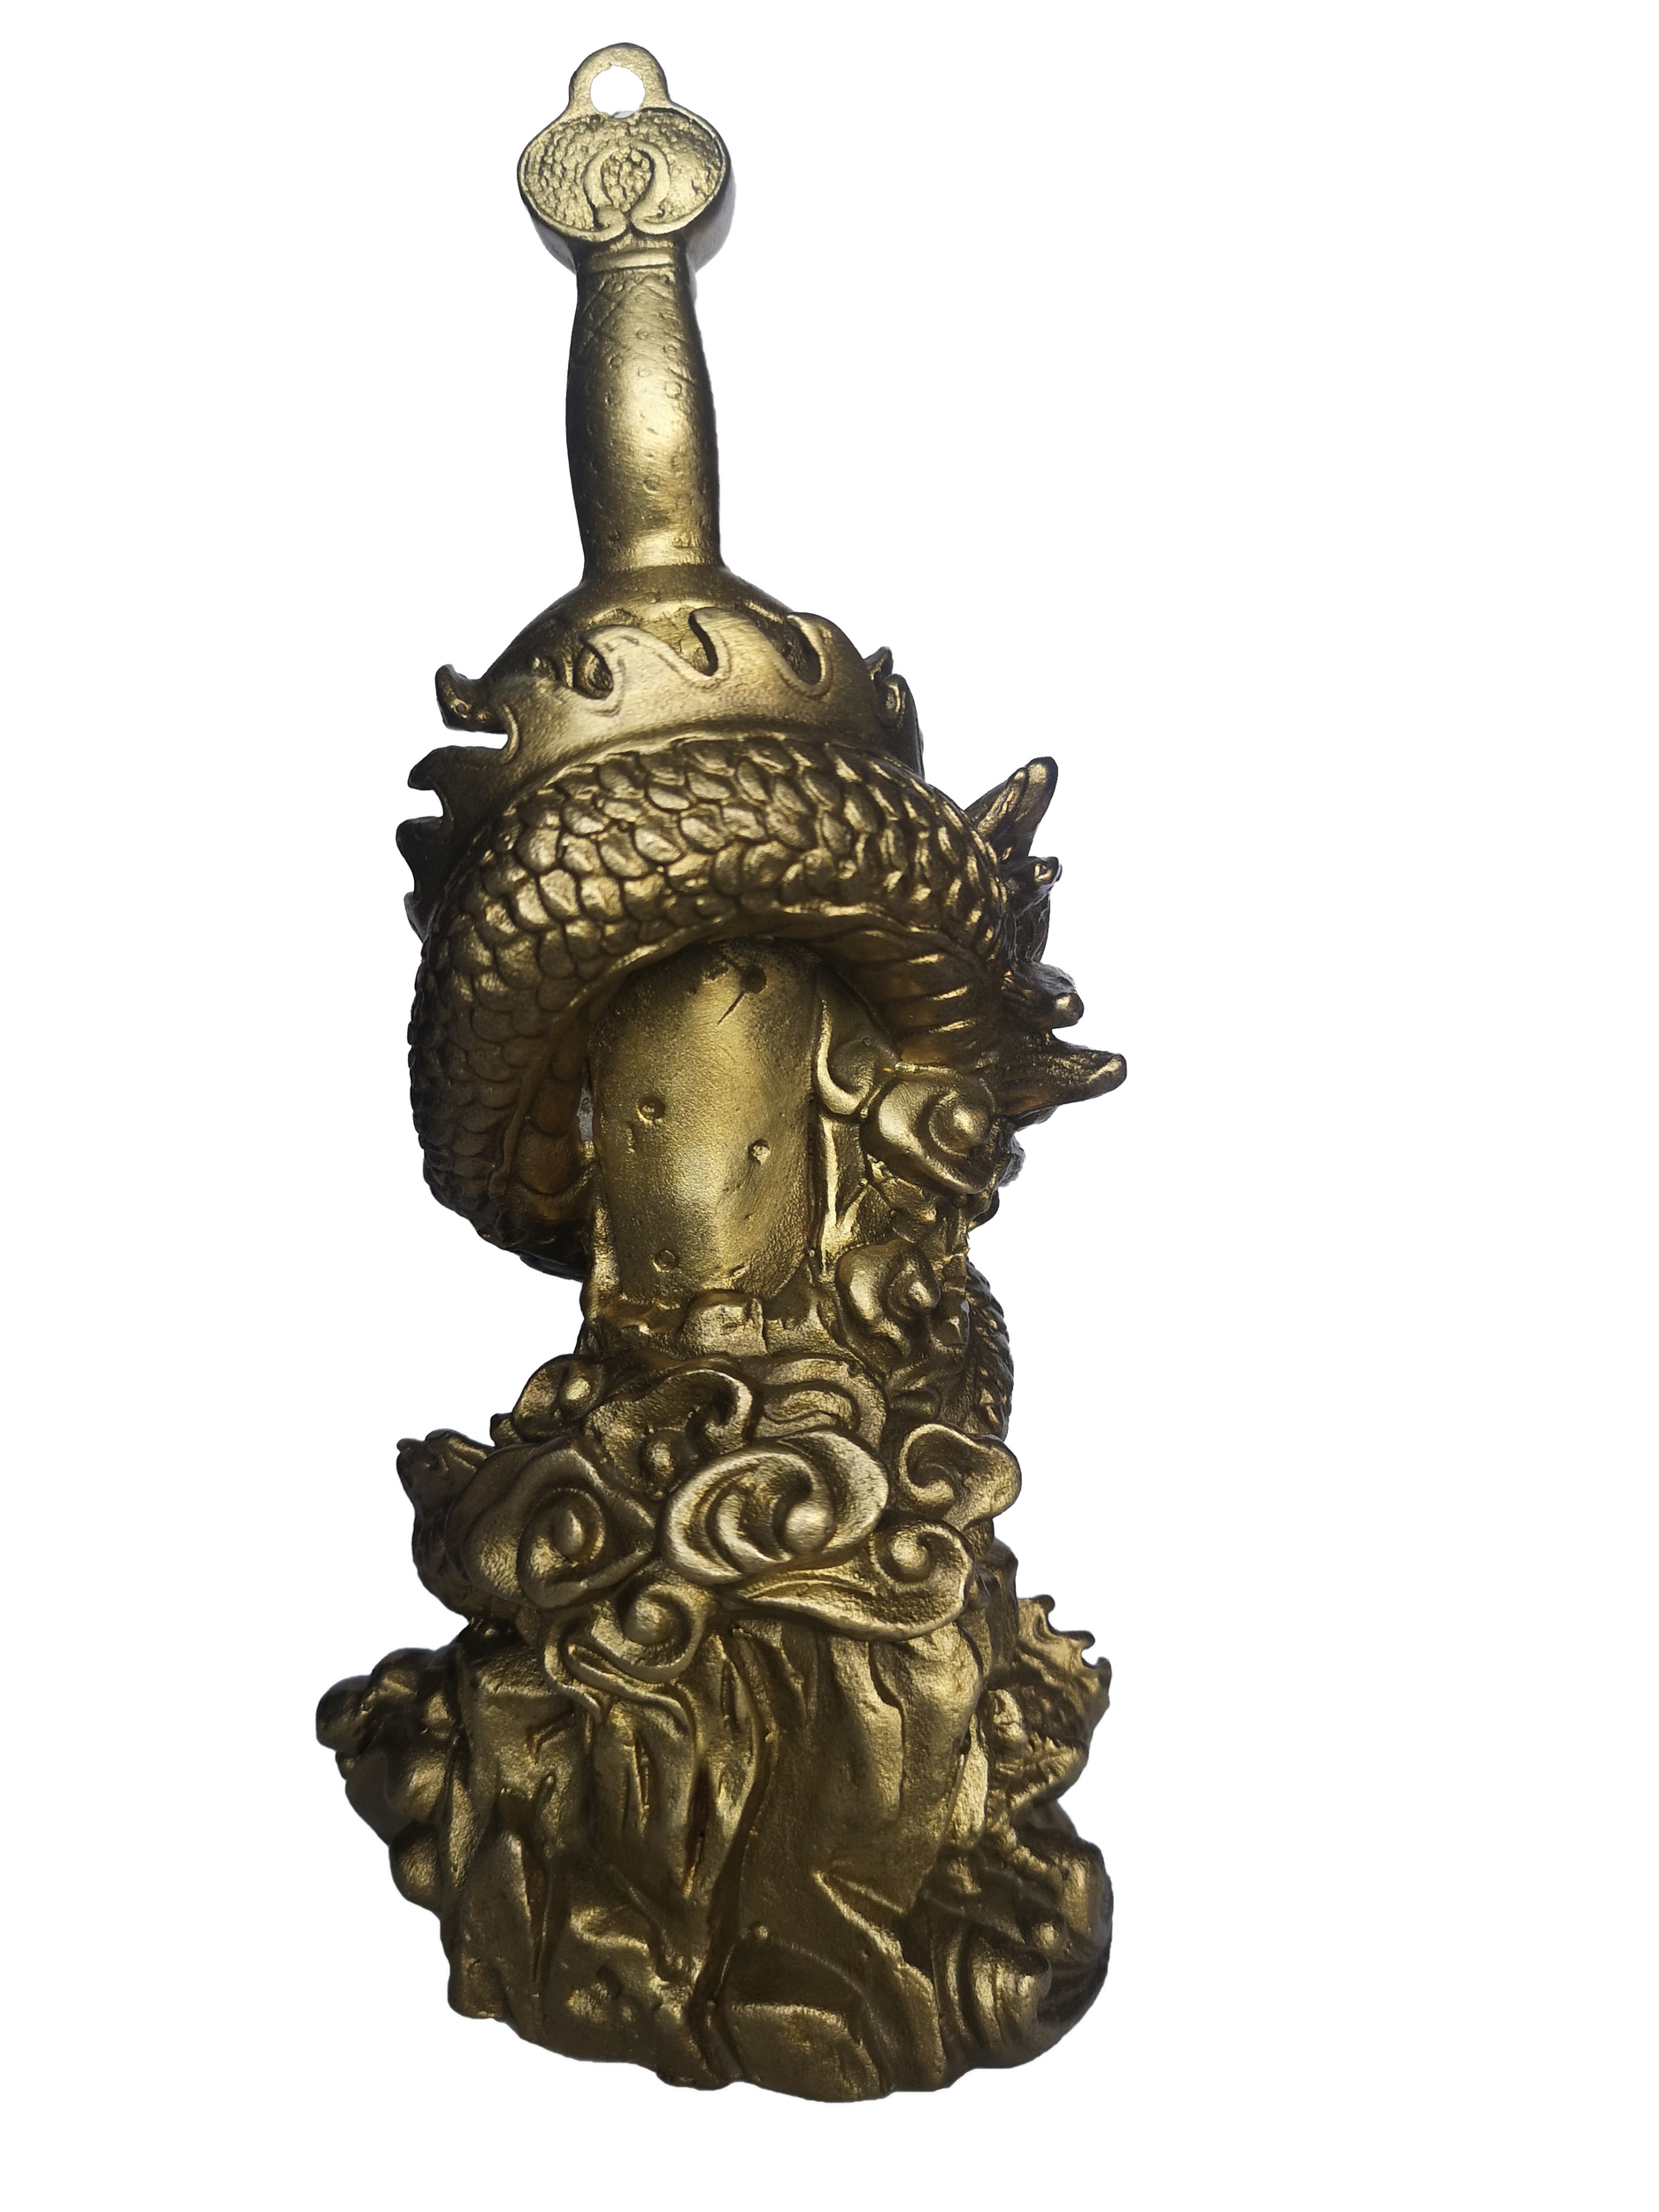 2. dragon bronze